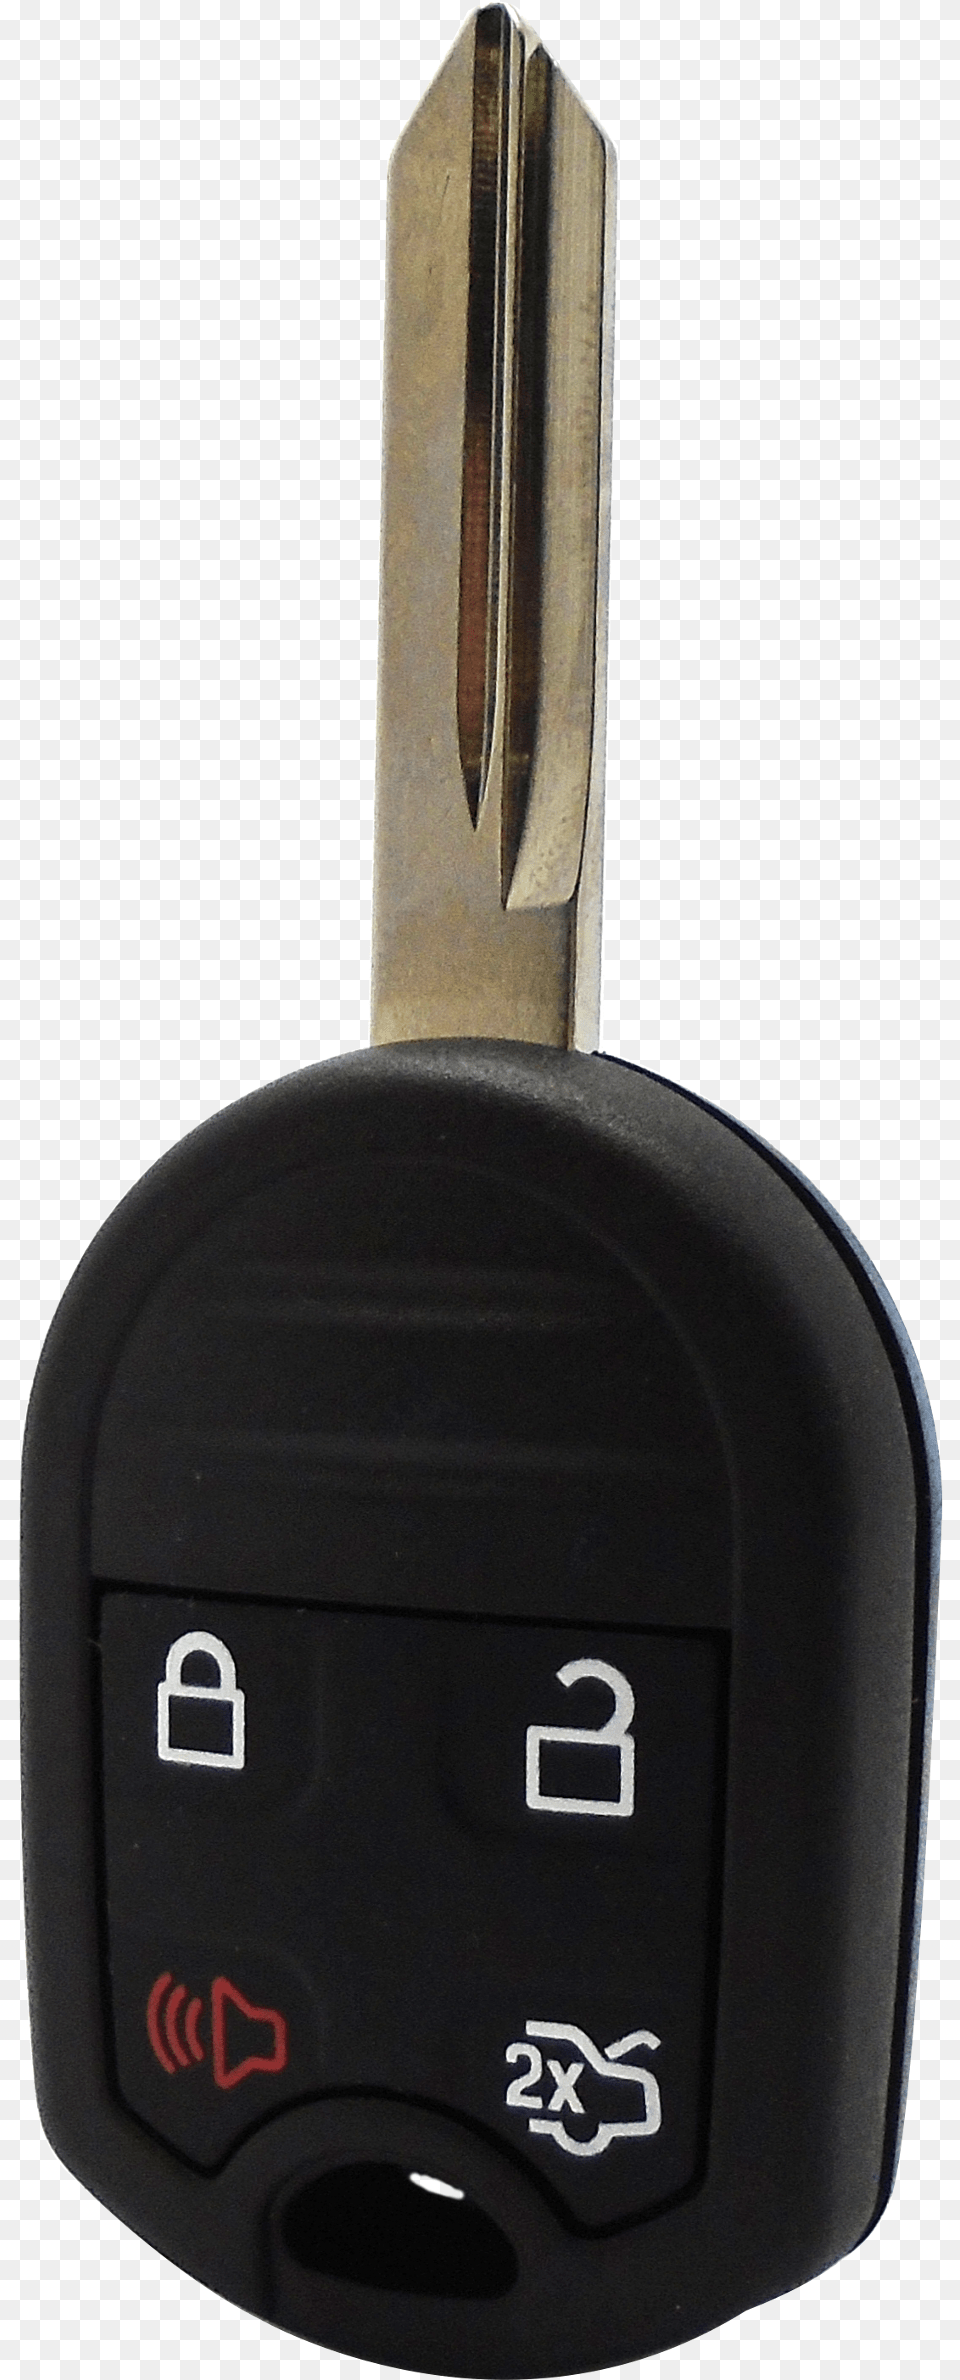 Ford Remote Key Key Png Image